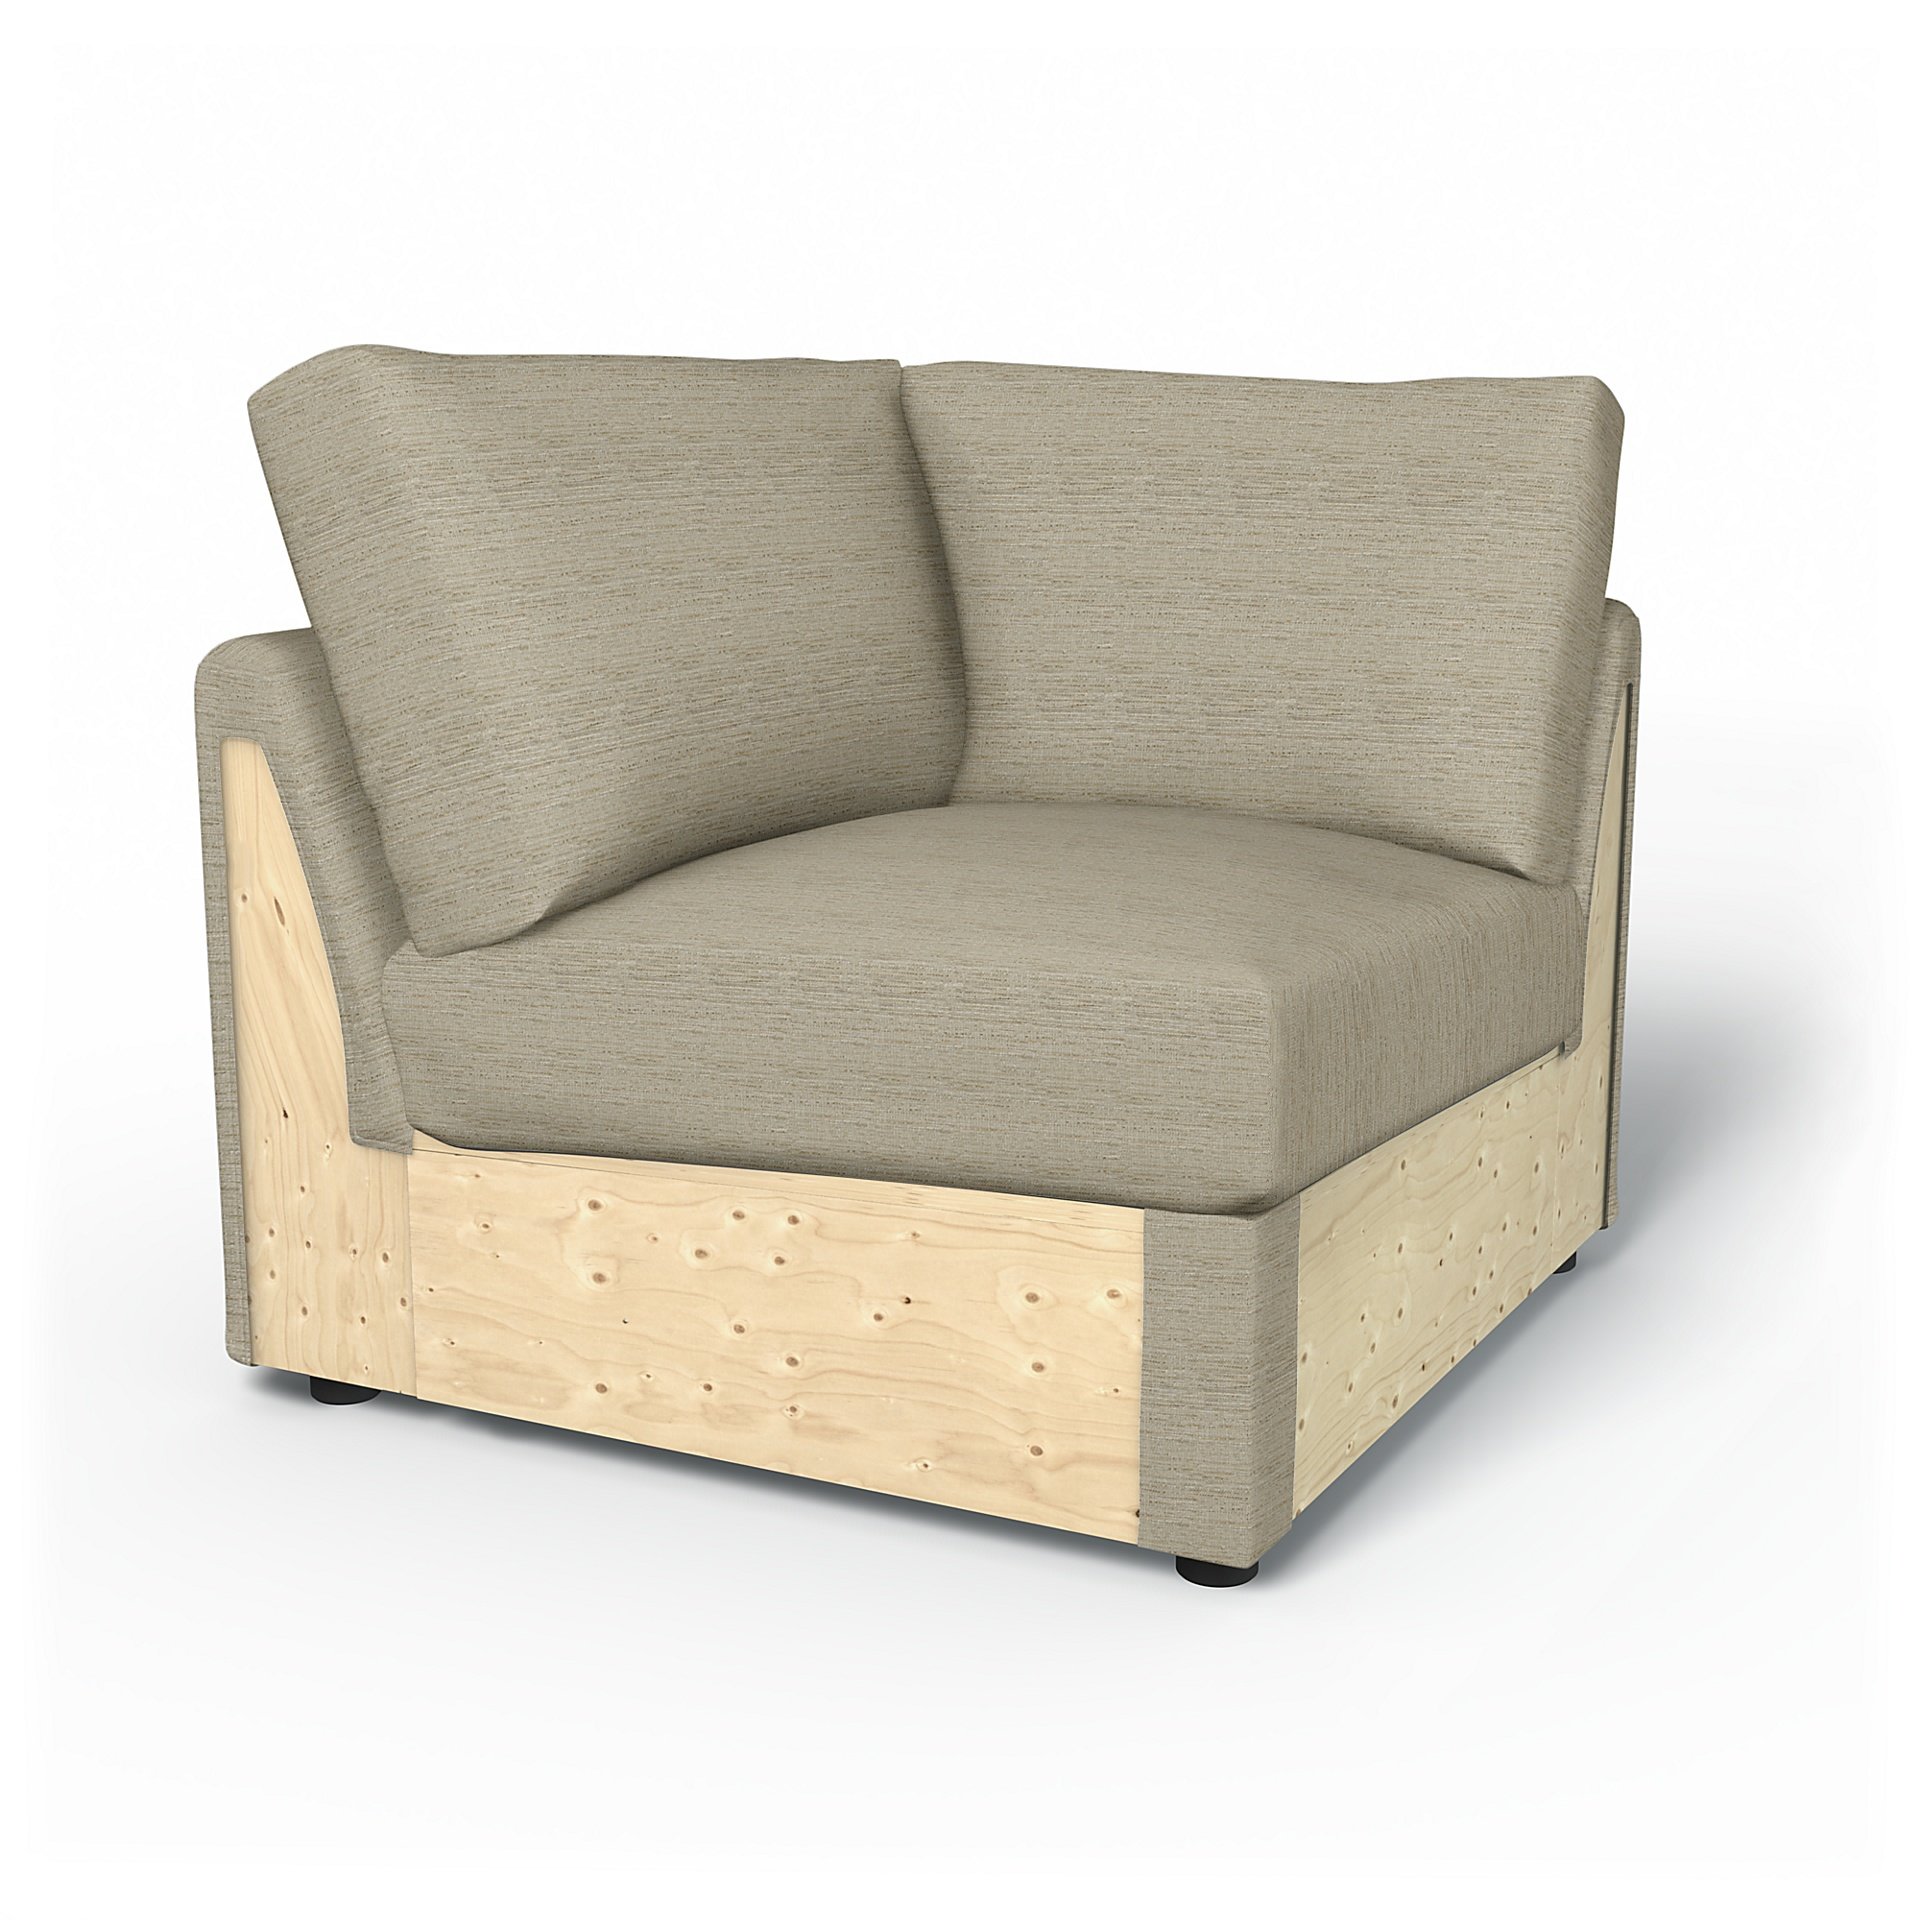 IKEA - Vimle Corner Section Cover, Light Sand, Boucle & Texture - Bemz